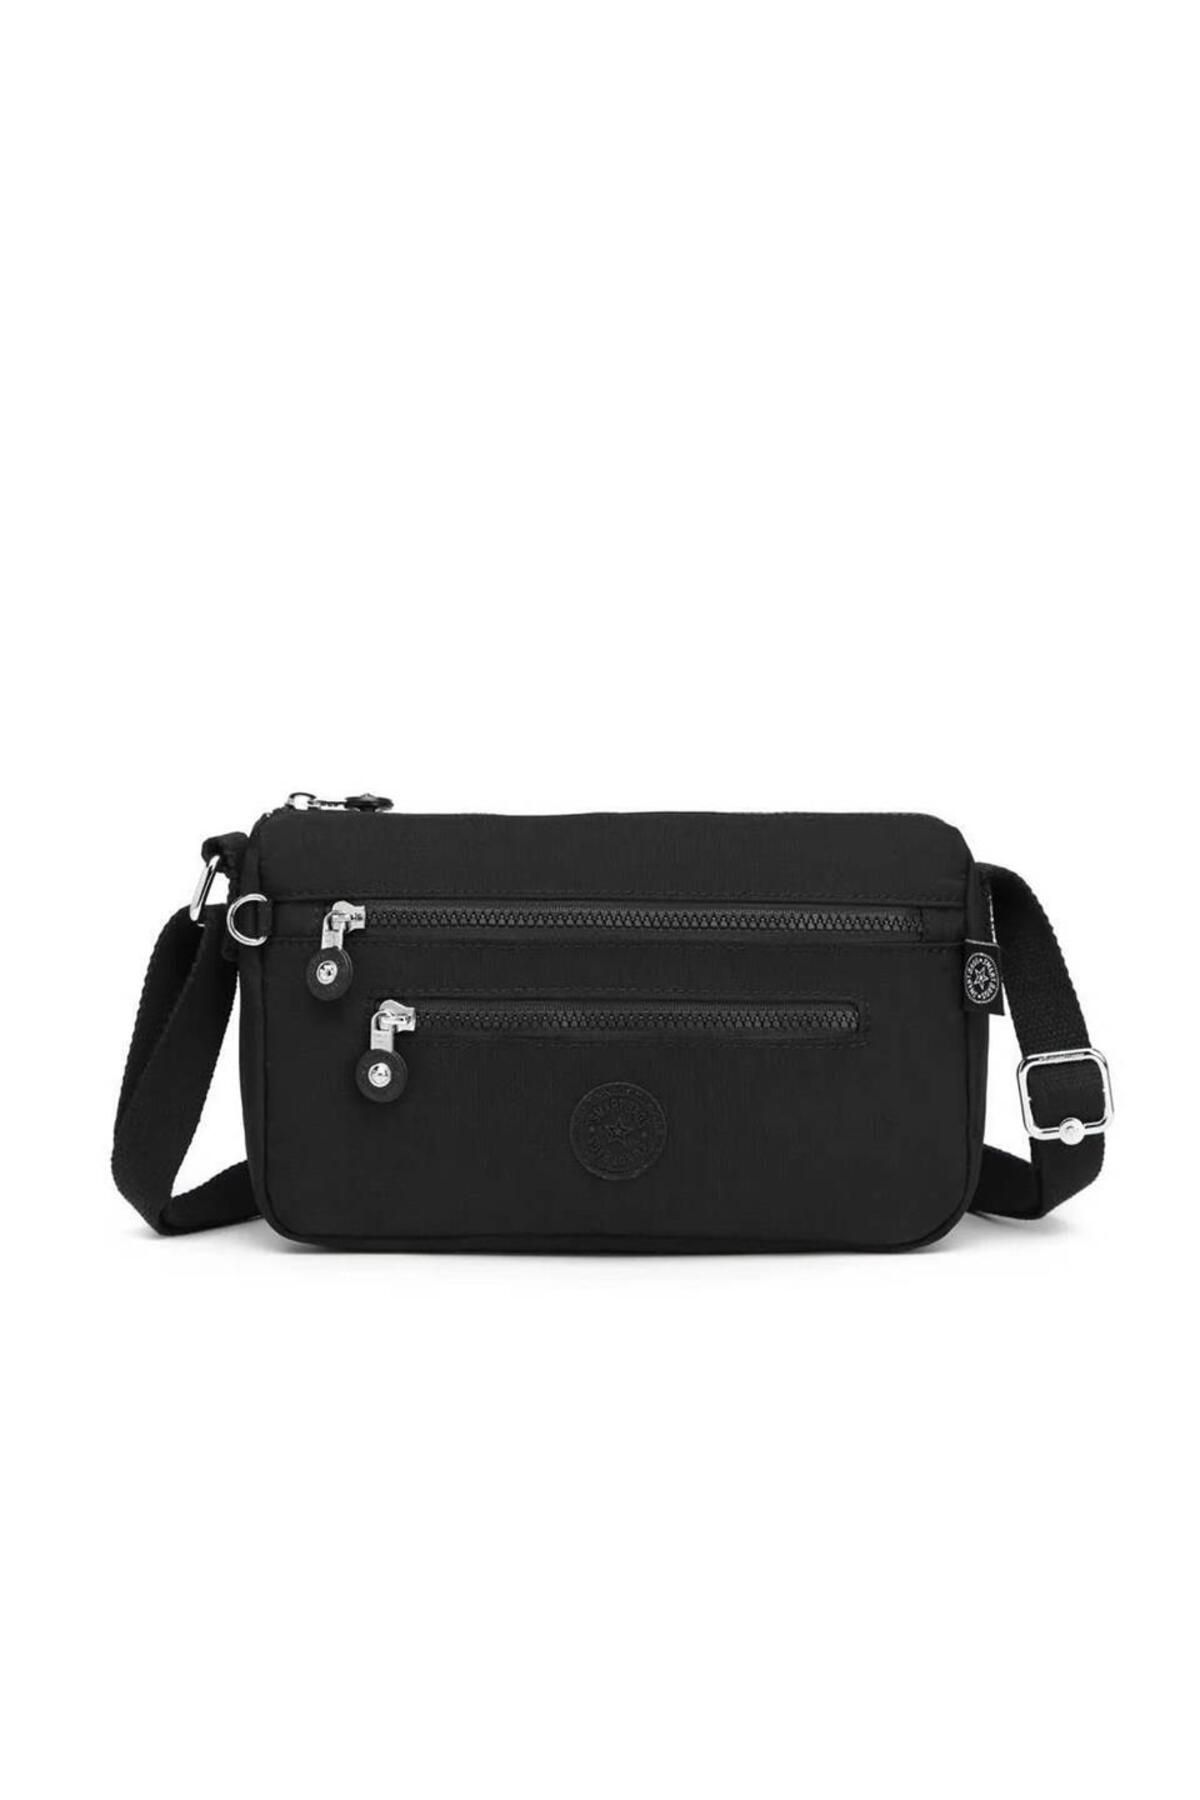 Smart Bags 3095 Çapraz Çanta Siyah